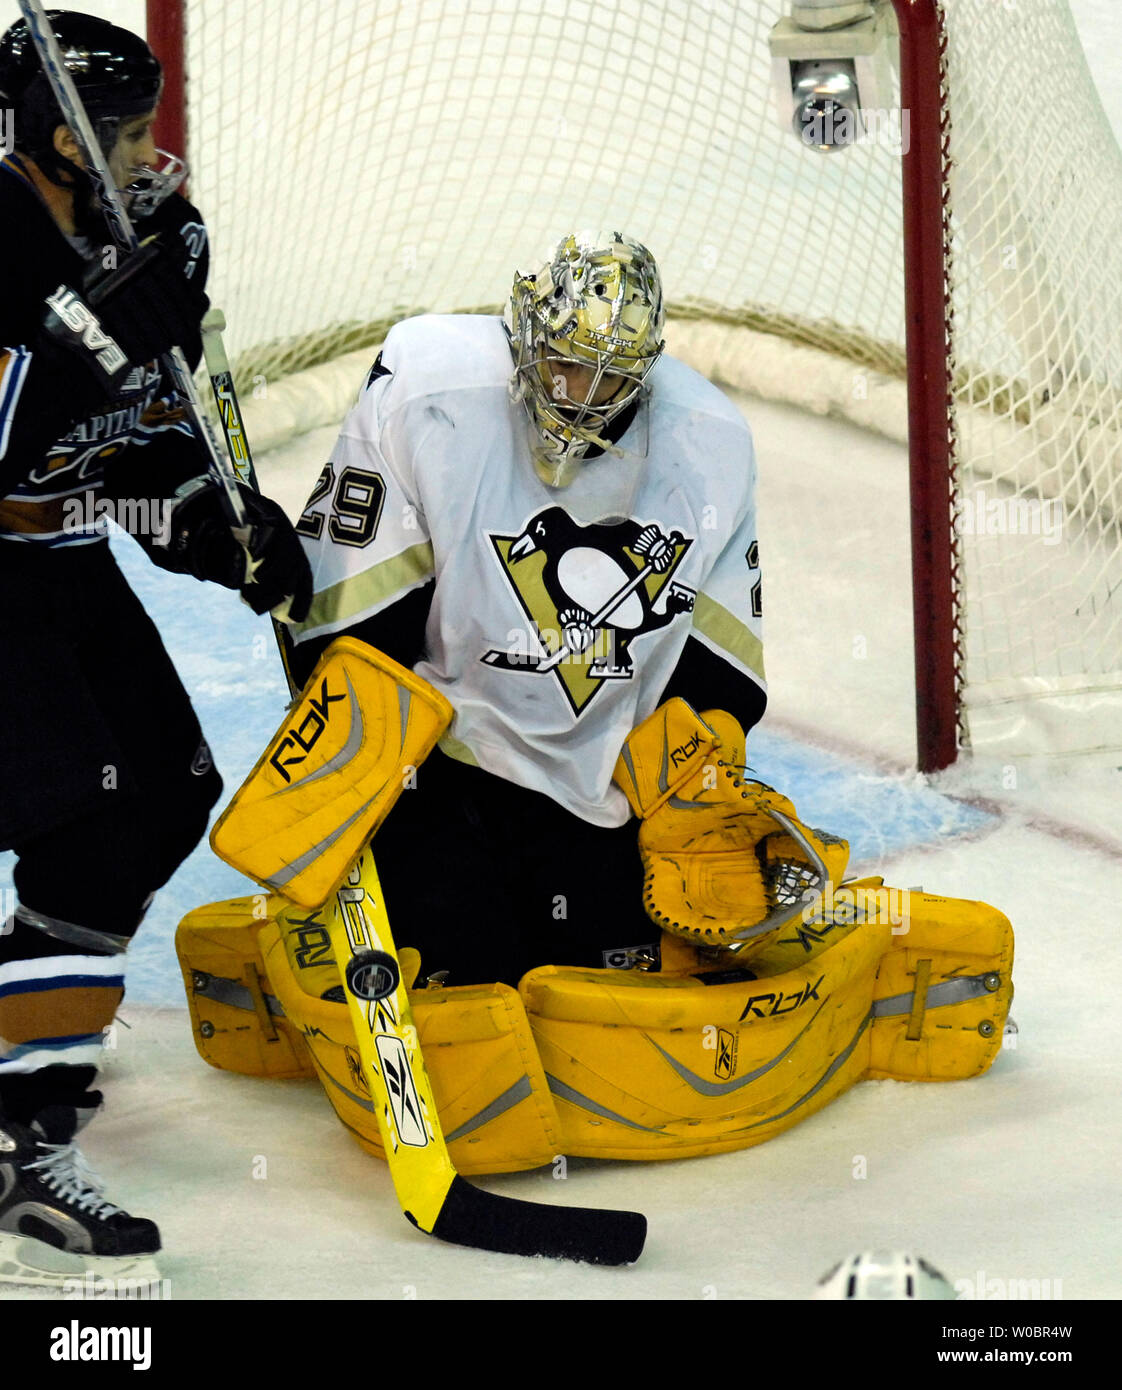 The Penguins vs. Marc-Andre Fleury: A history - PensBurgh